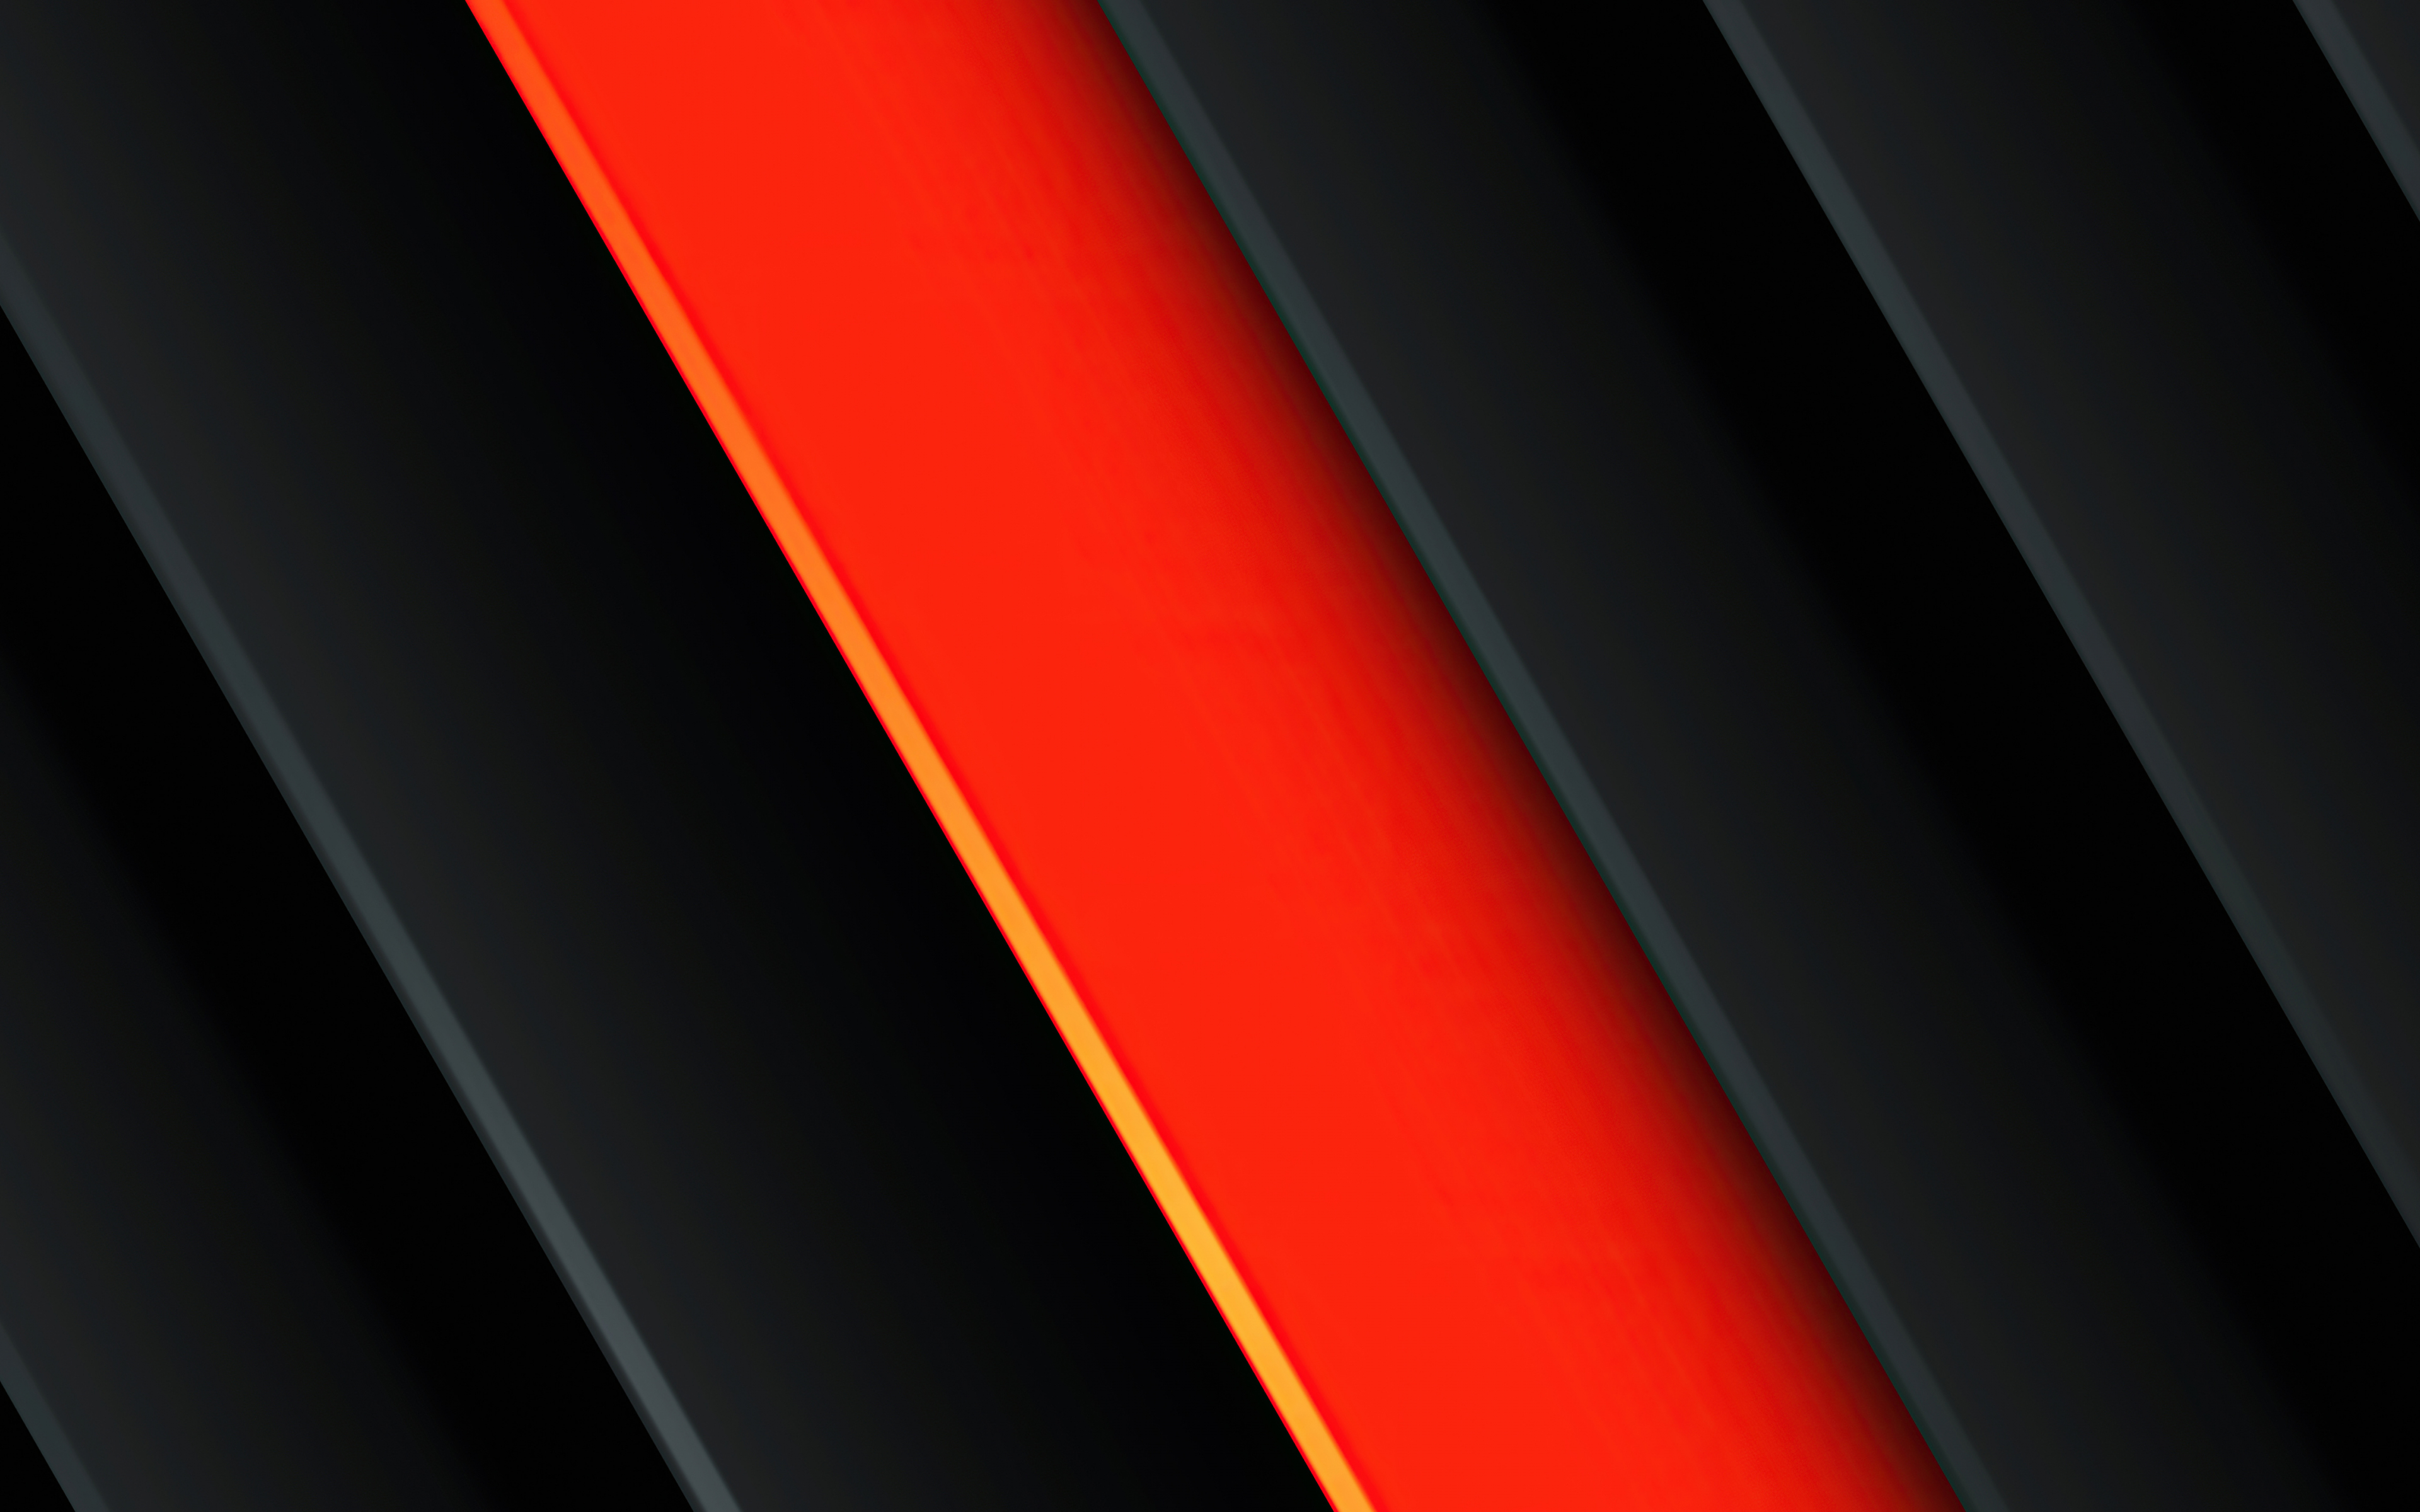 Download wallpaper 3840x2400 orange-red & black stripes, abstract 4k  wallaper, 4k ultra hd 16:10 wallpaper, 3840x2400 hd background, 26950